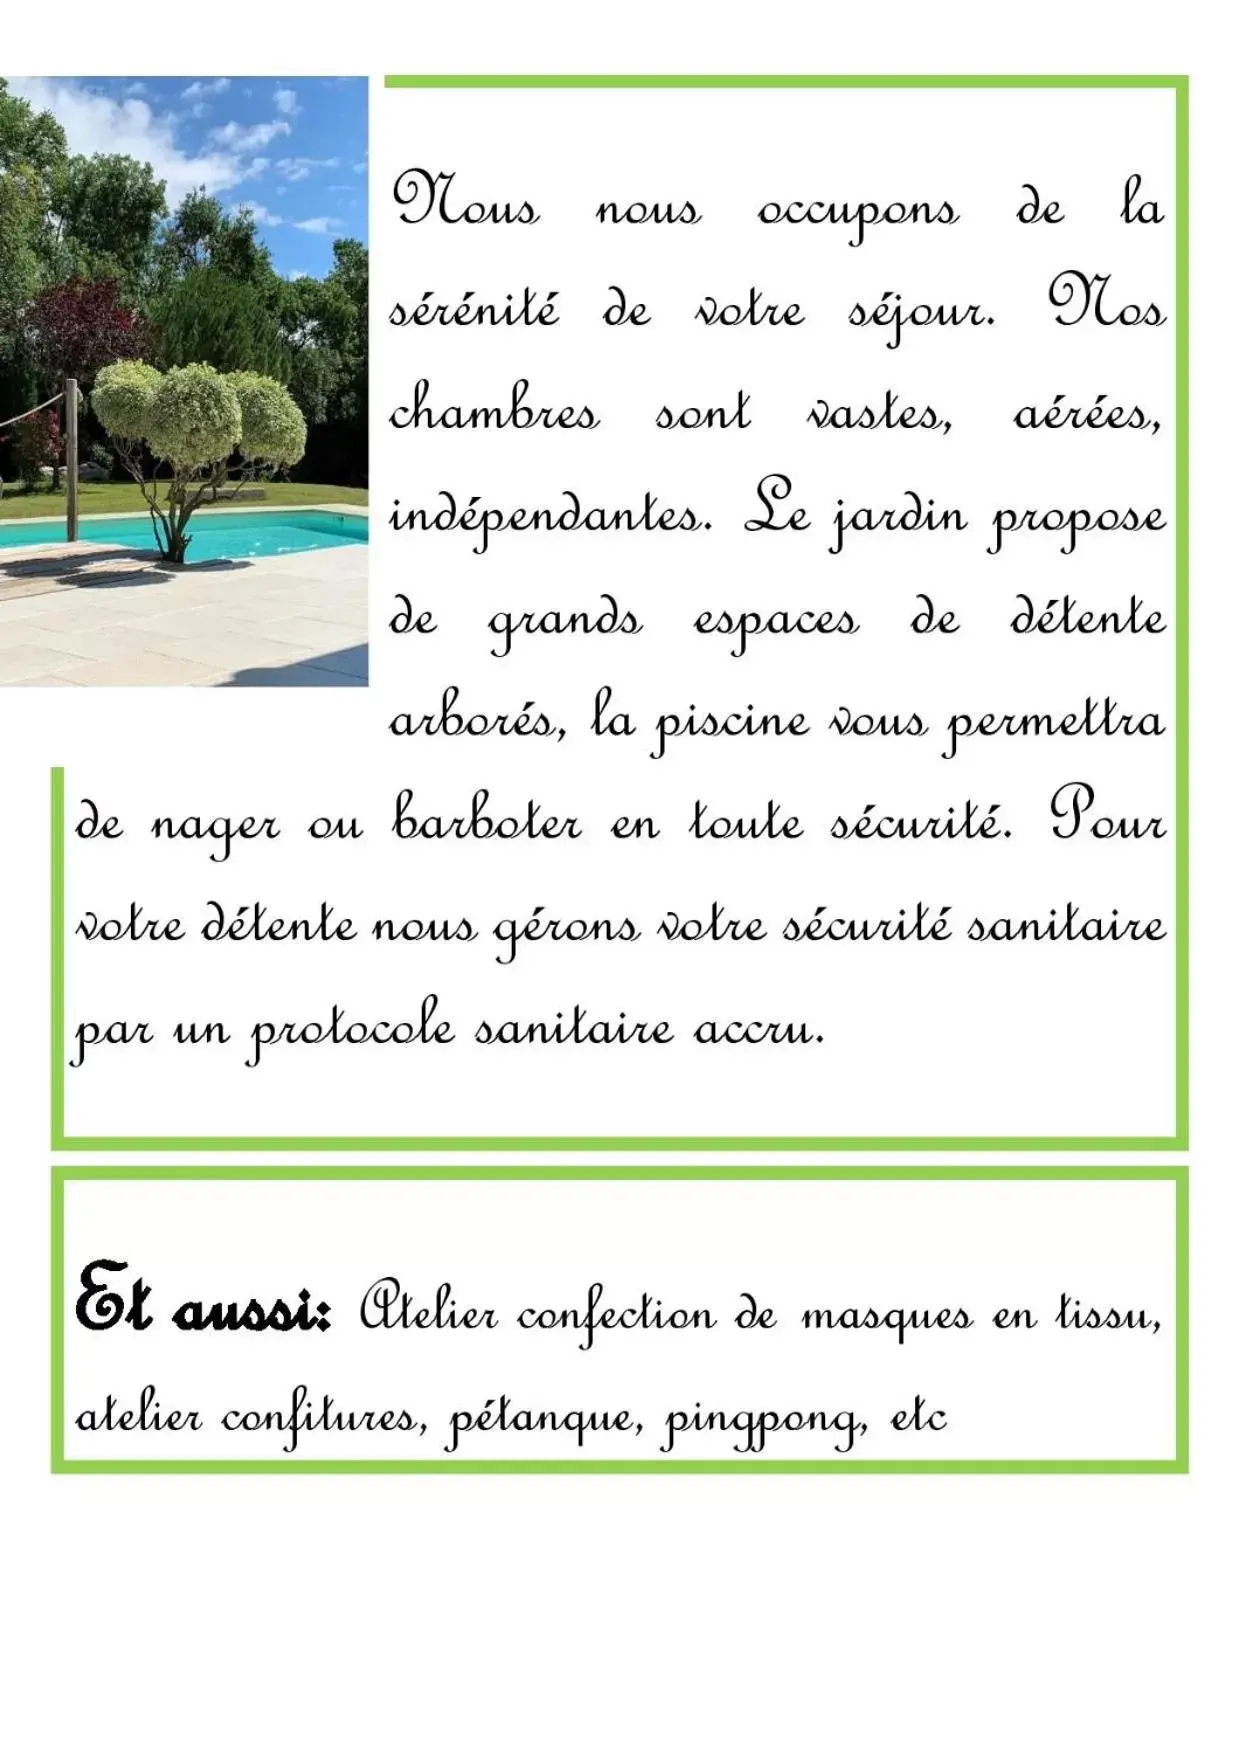 Area and facilities in Le Jardin de LaCoste